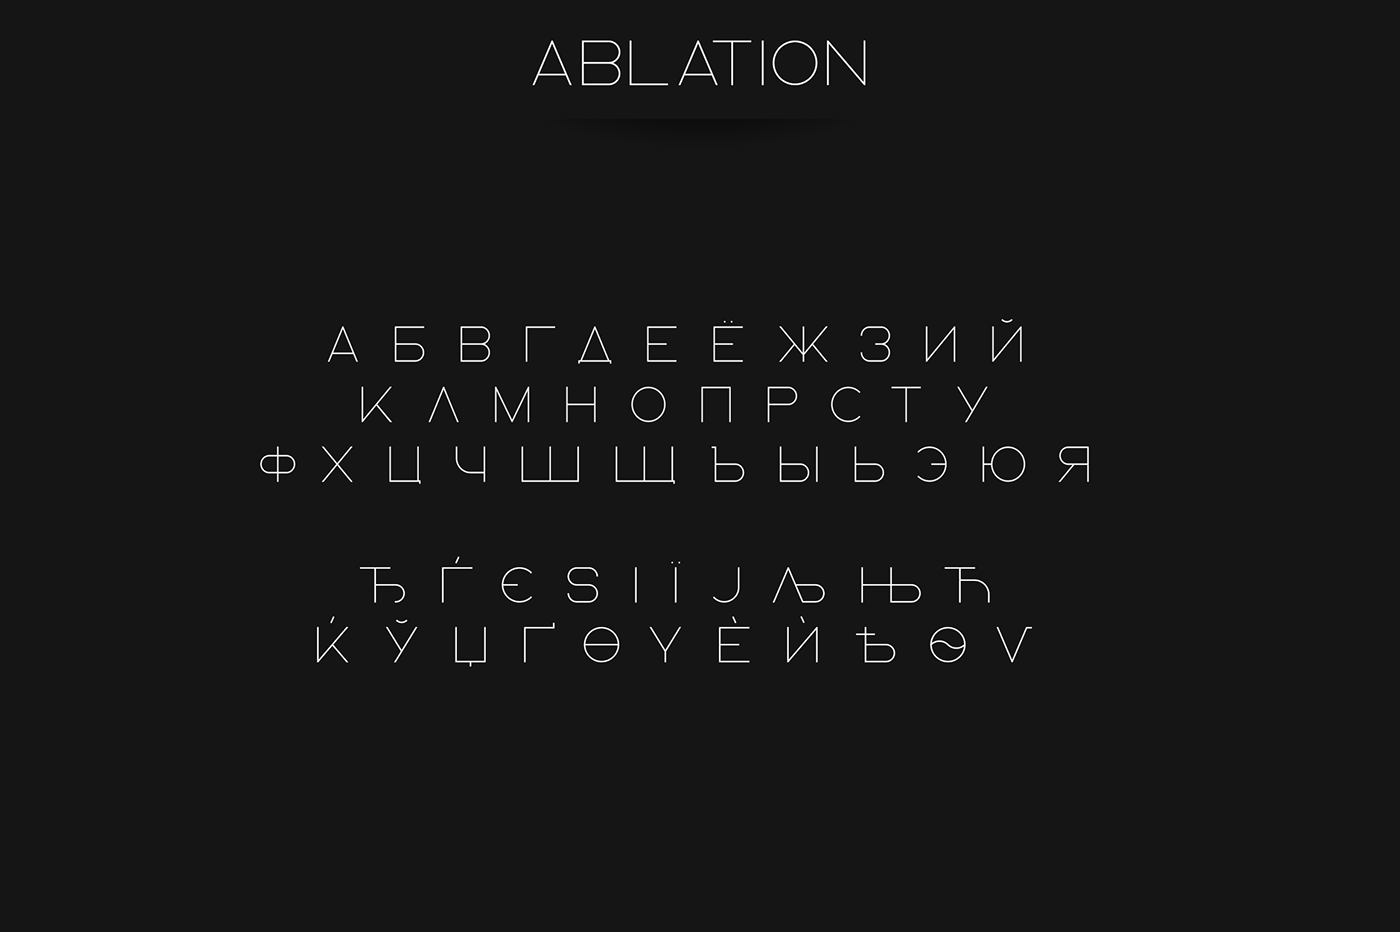 free freebie Free font giveaway download Typeface Cyrillic typography   Display modern